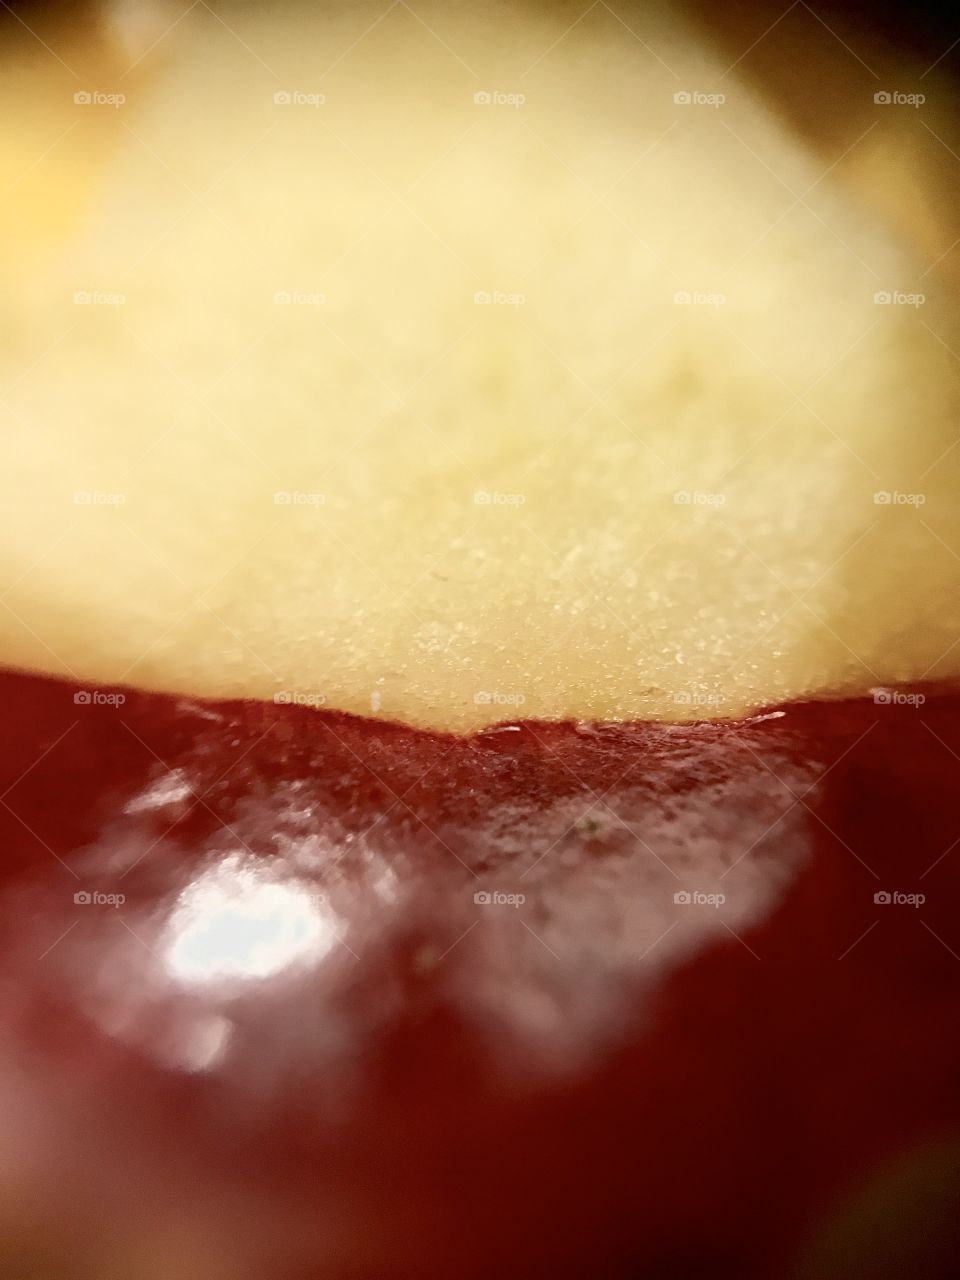 Apple slice close up